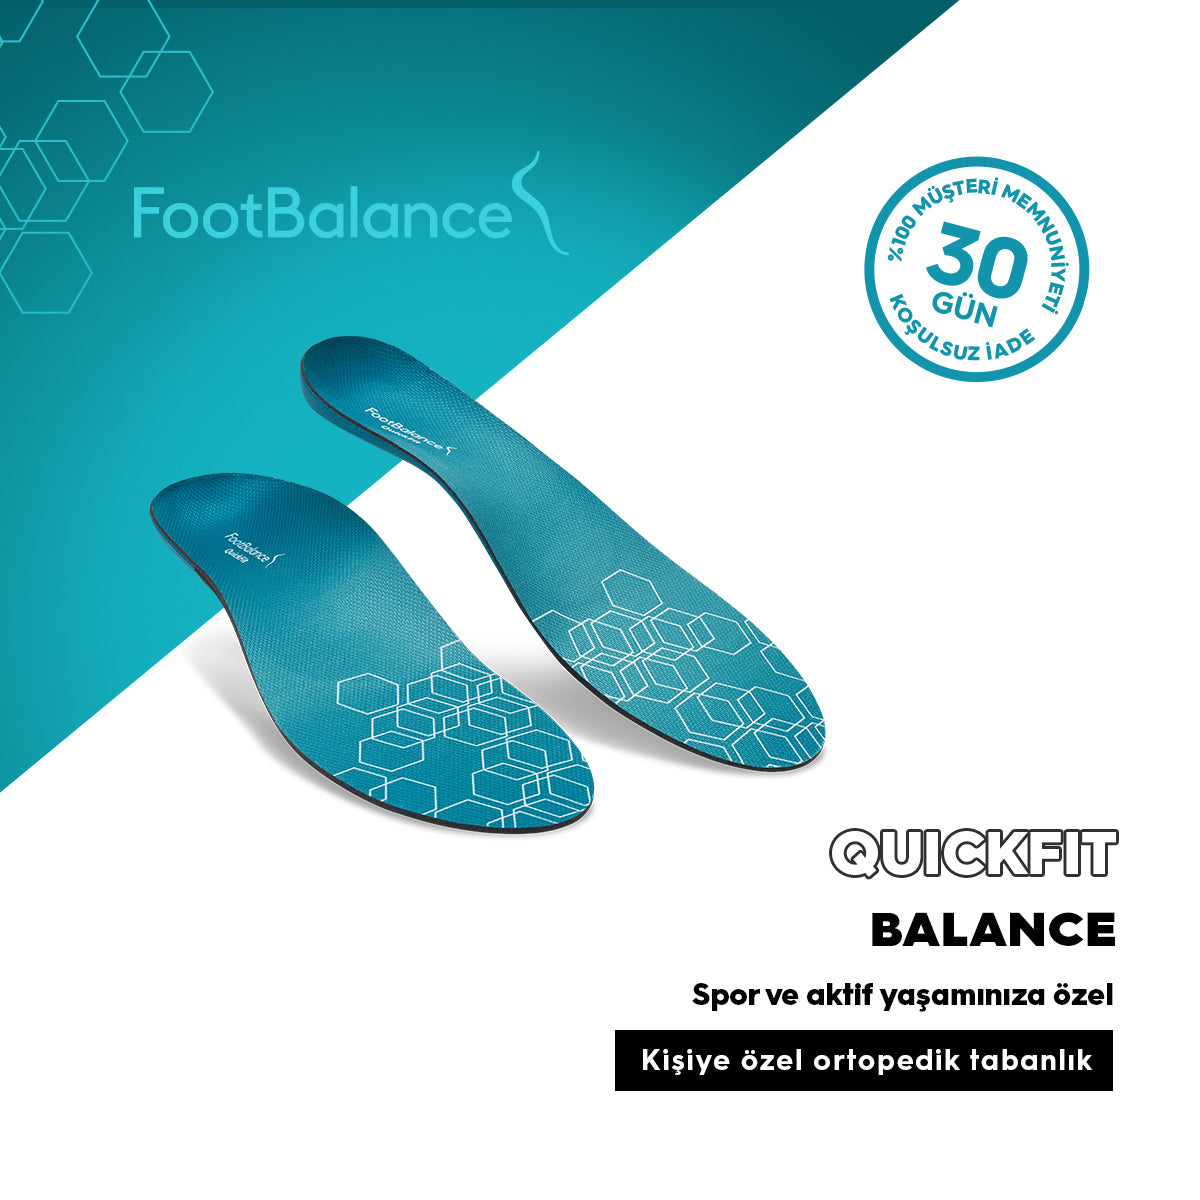 FootBalance QuickFit Balance ortopedik tabanlık/ Mavi